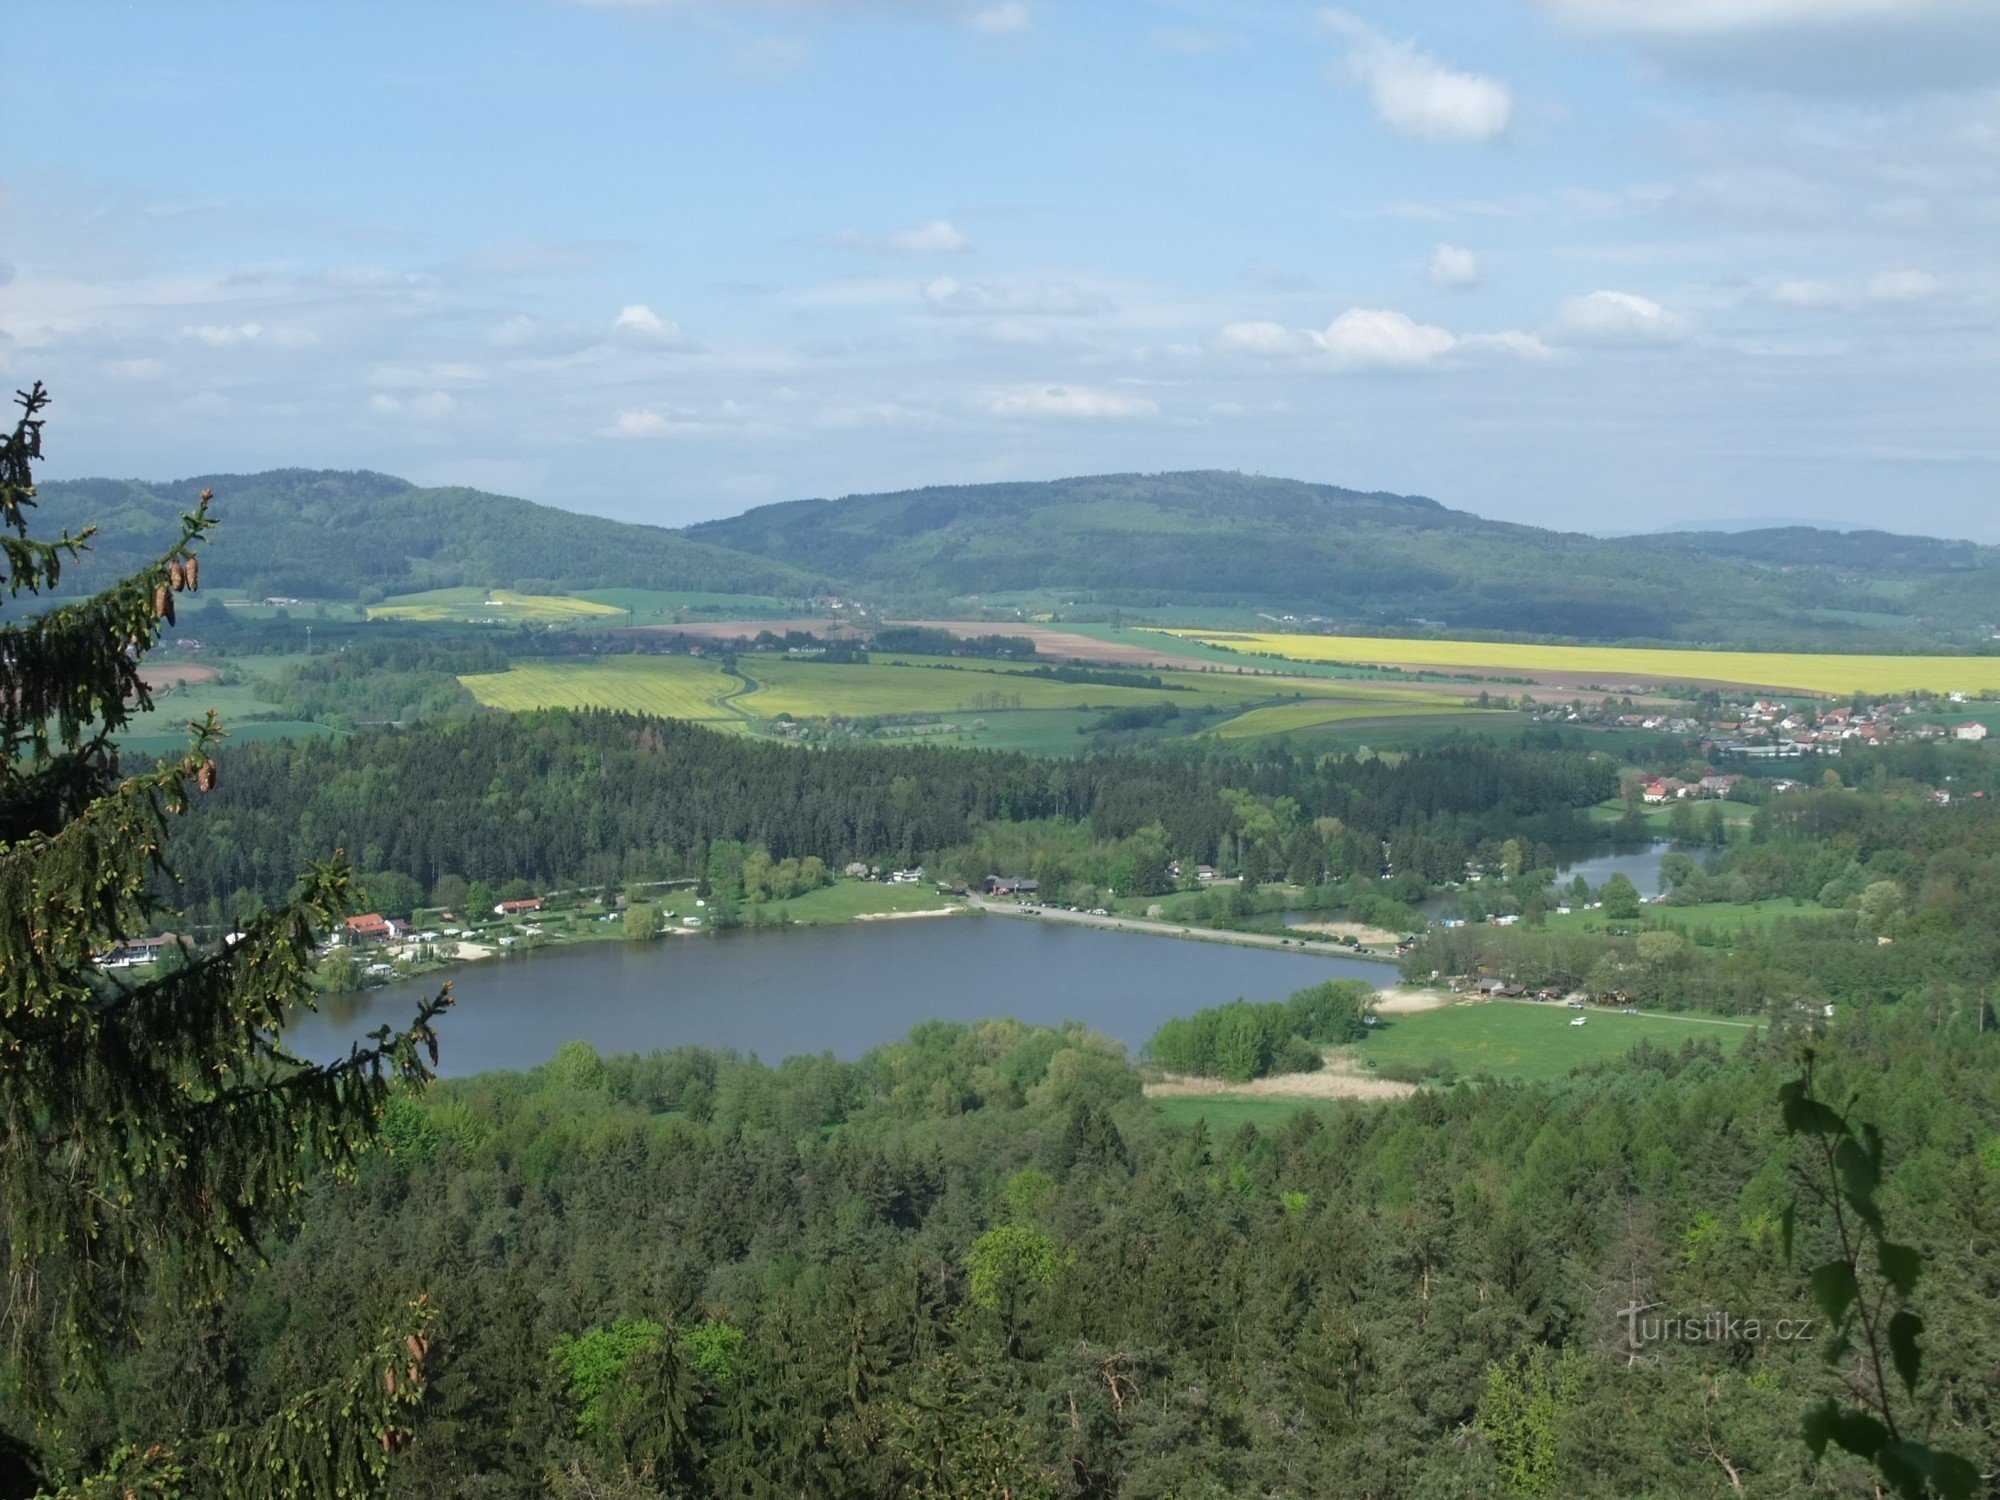 View of the Jinolické ponds